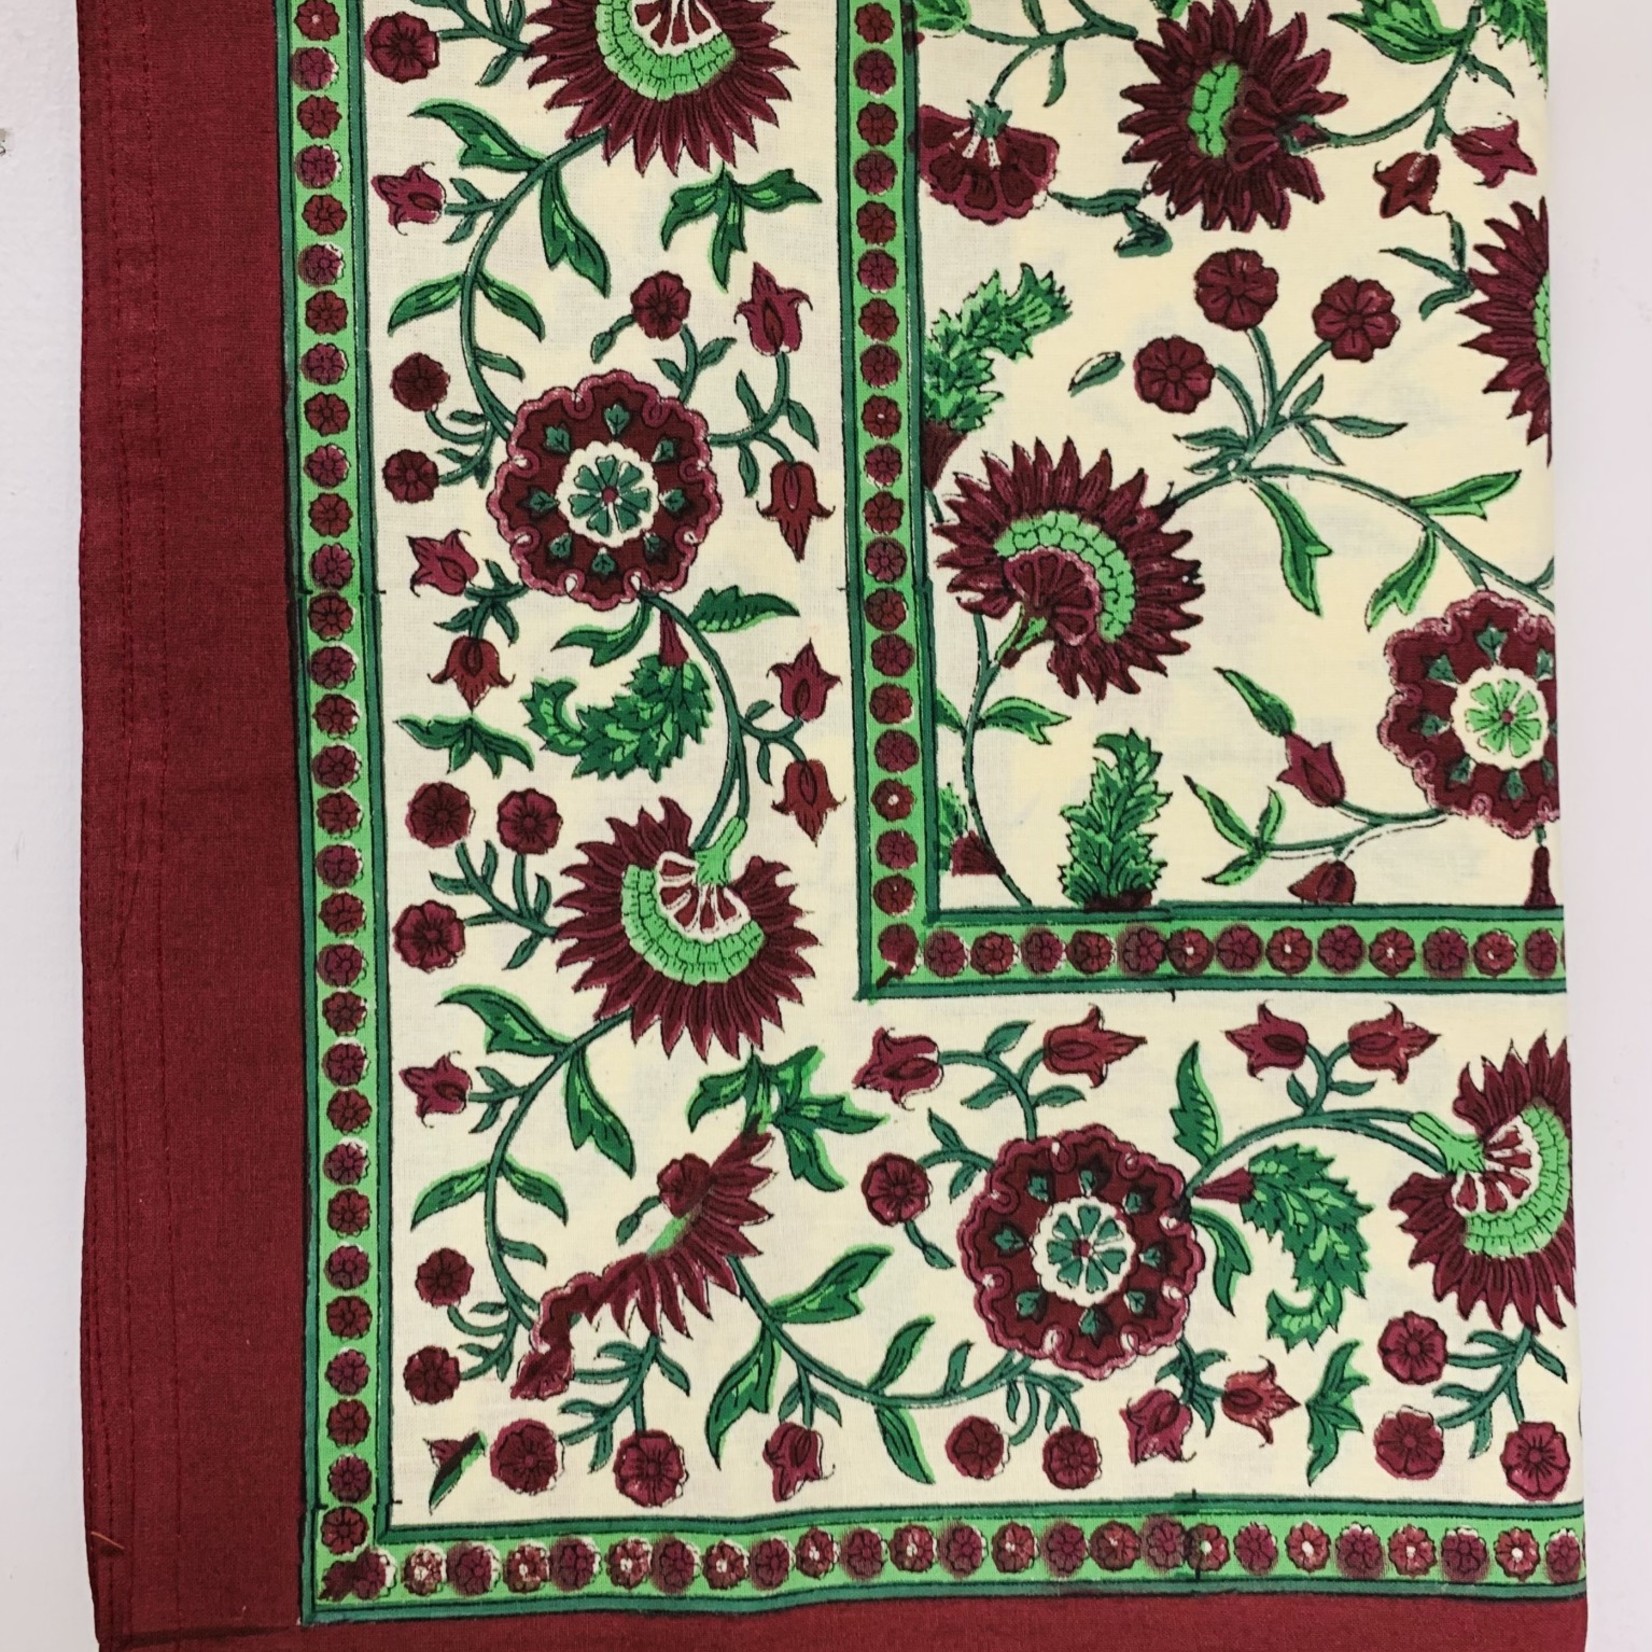 Living Imprints Crimson Aster Tablecloth 60"x60", India